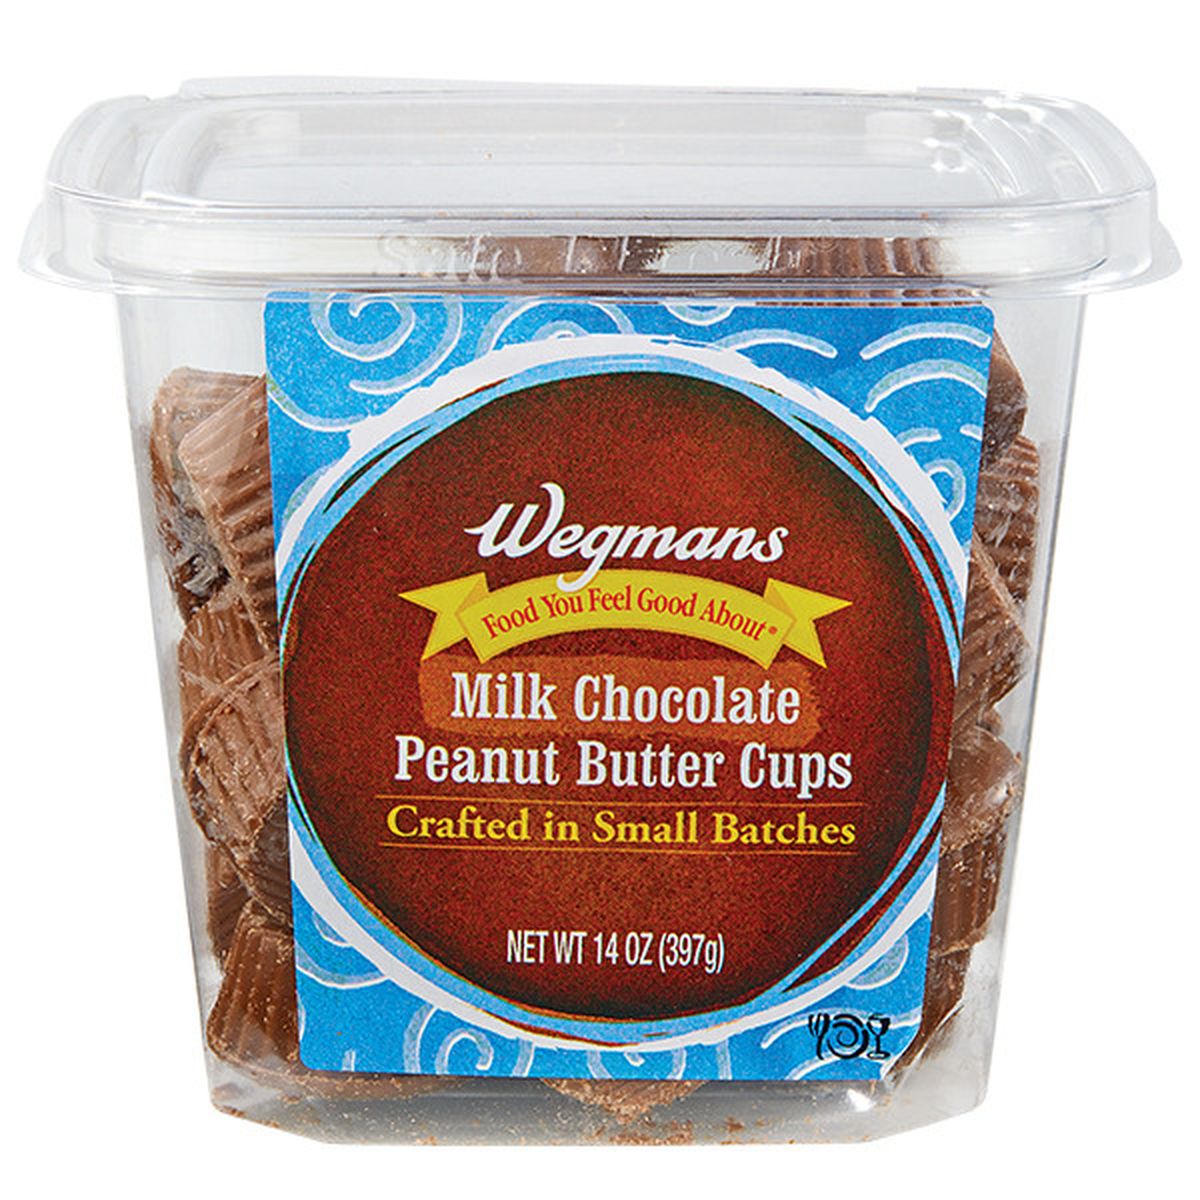 Calories in Wegmans Milk Chocolate Peanut Butter Cups